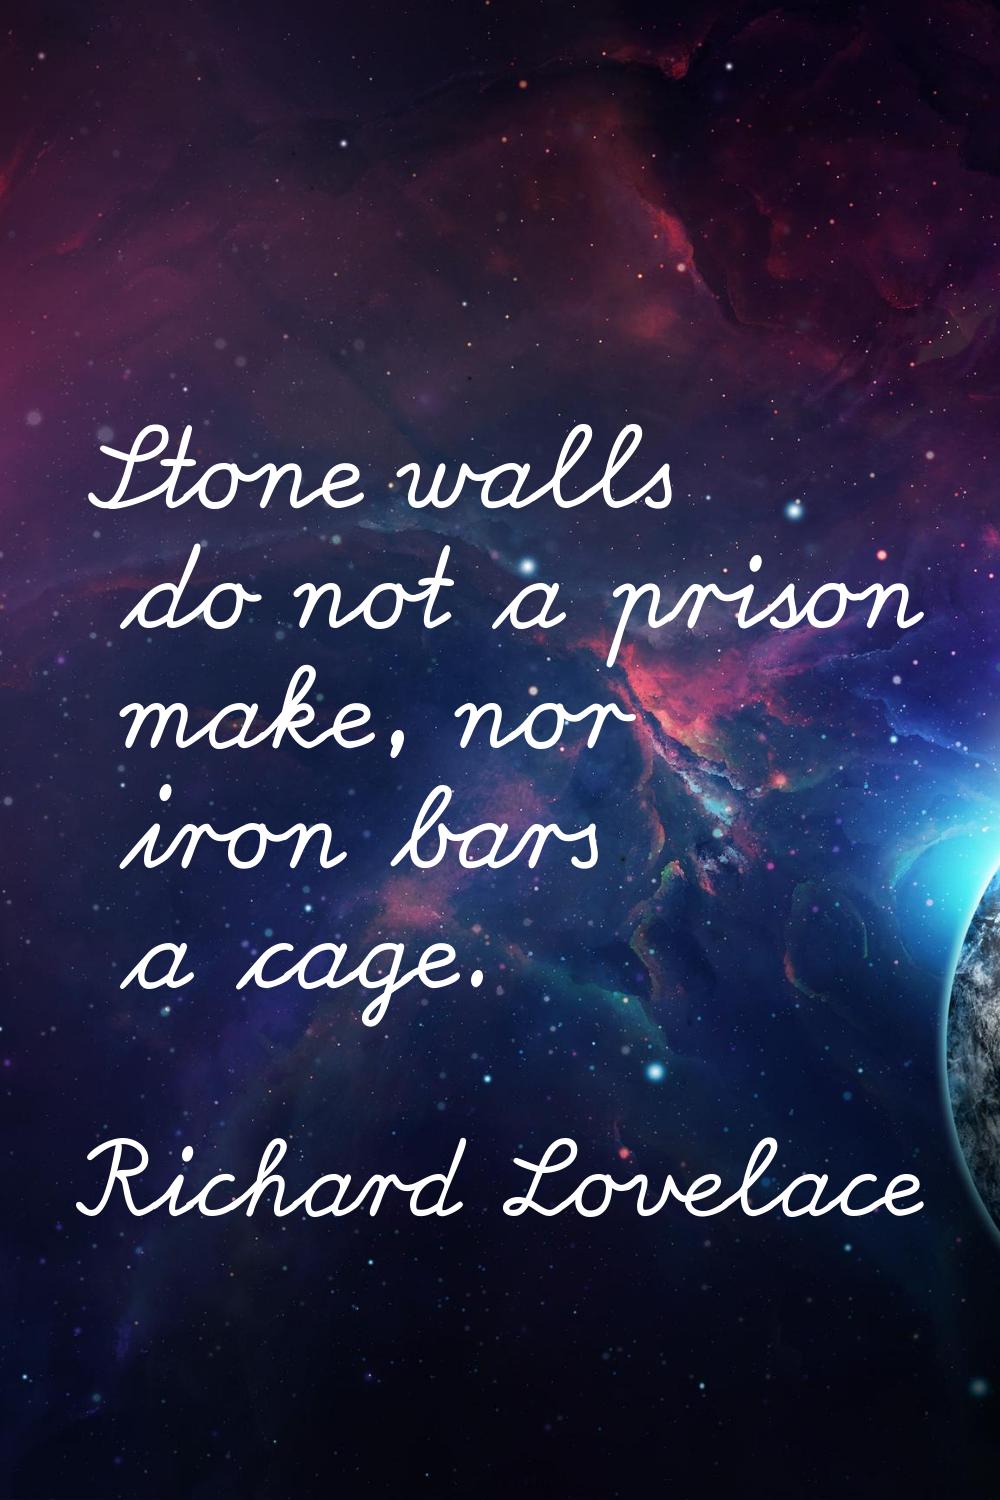 Stone walls do not a prison make, nor iron bars a cage.